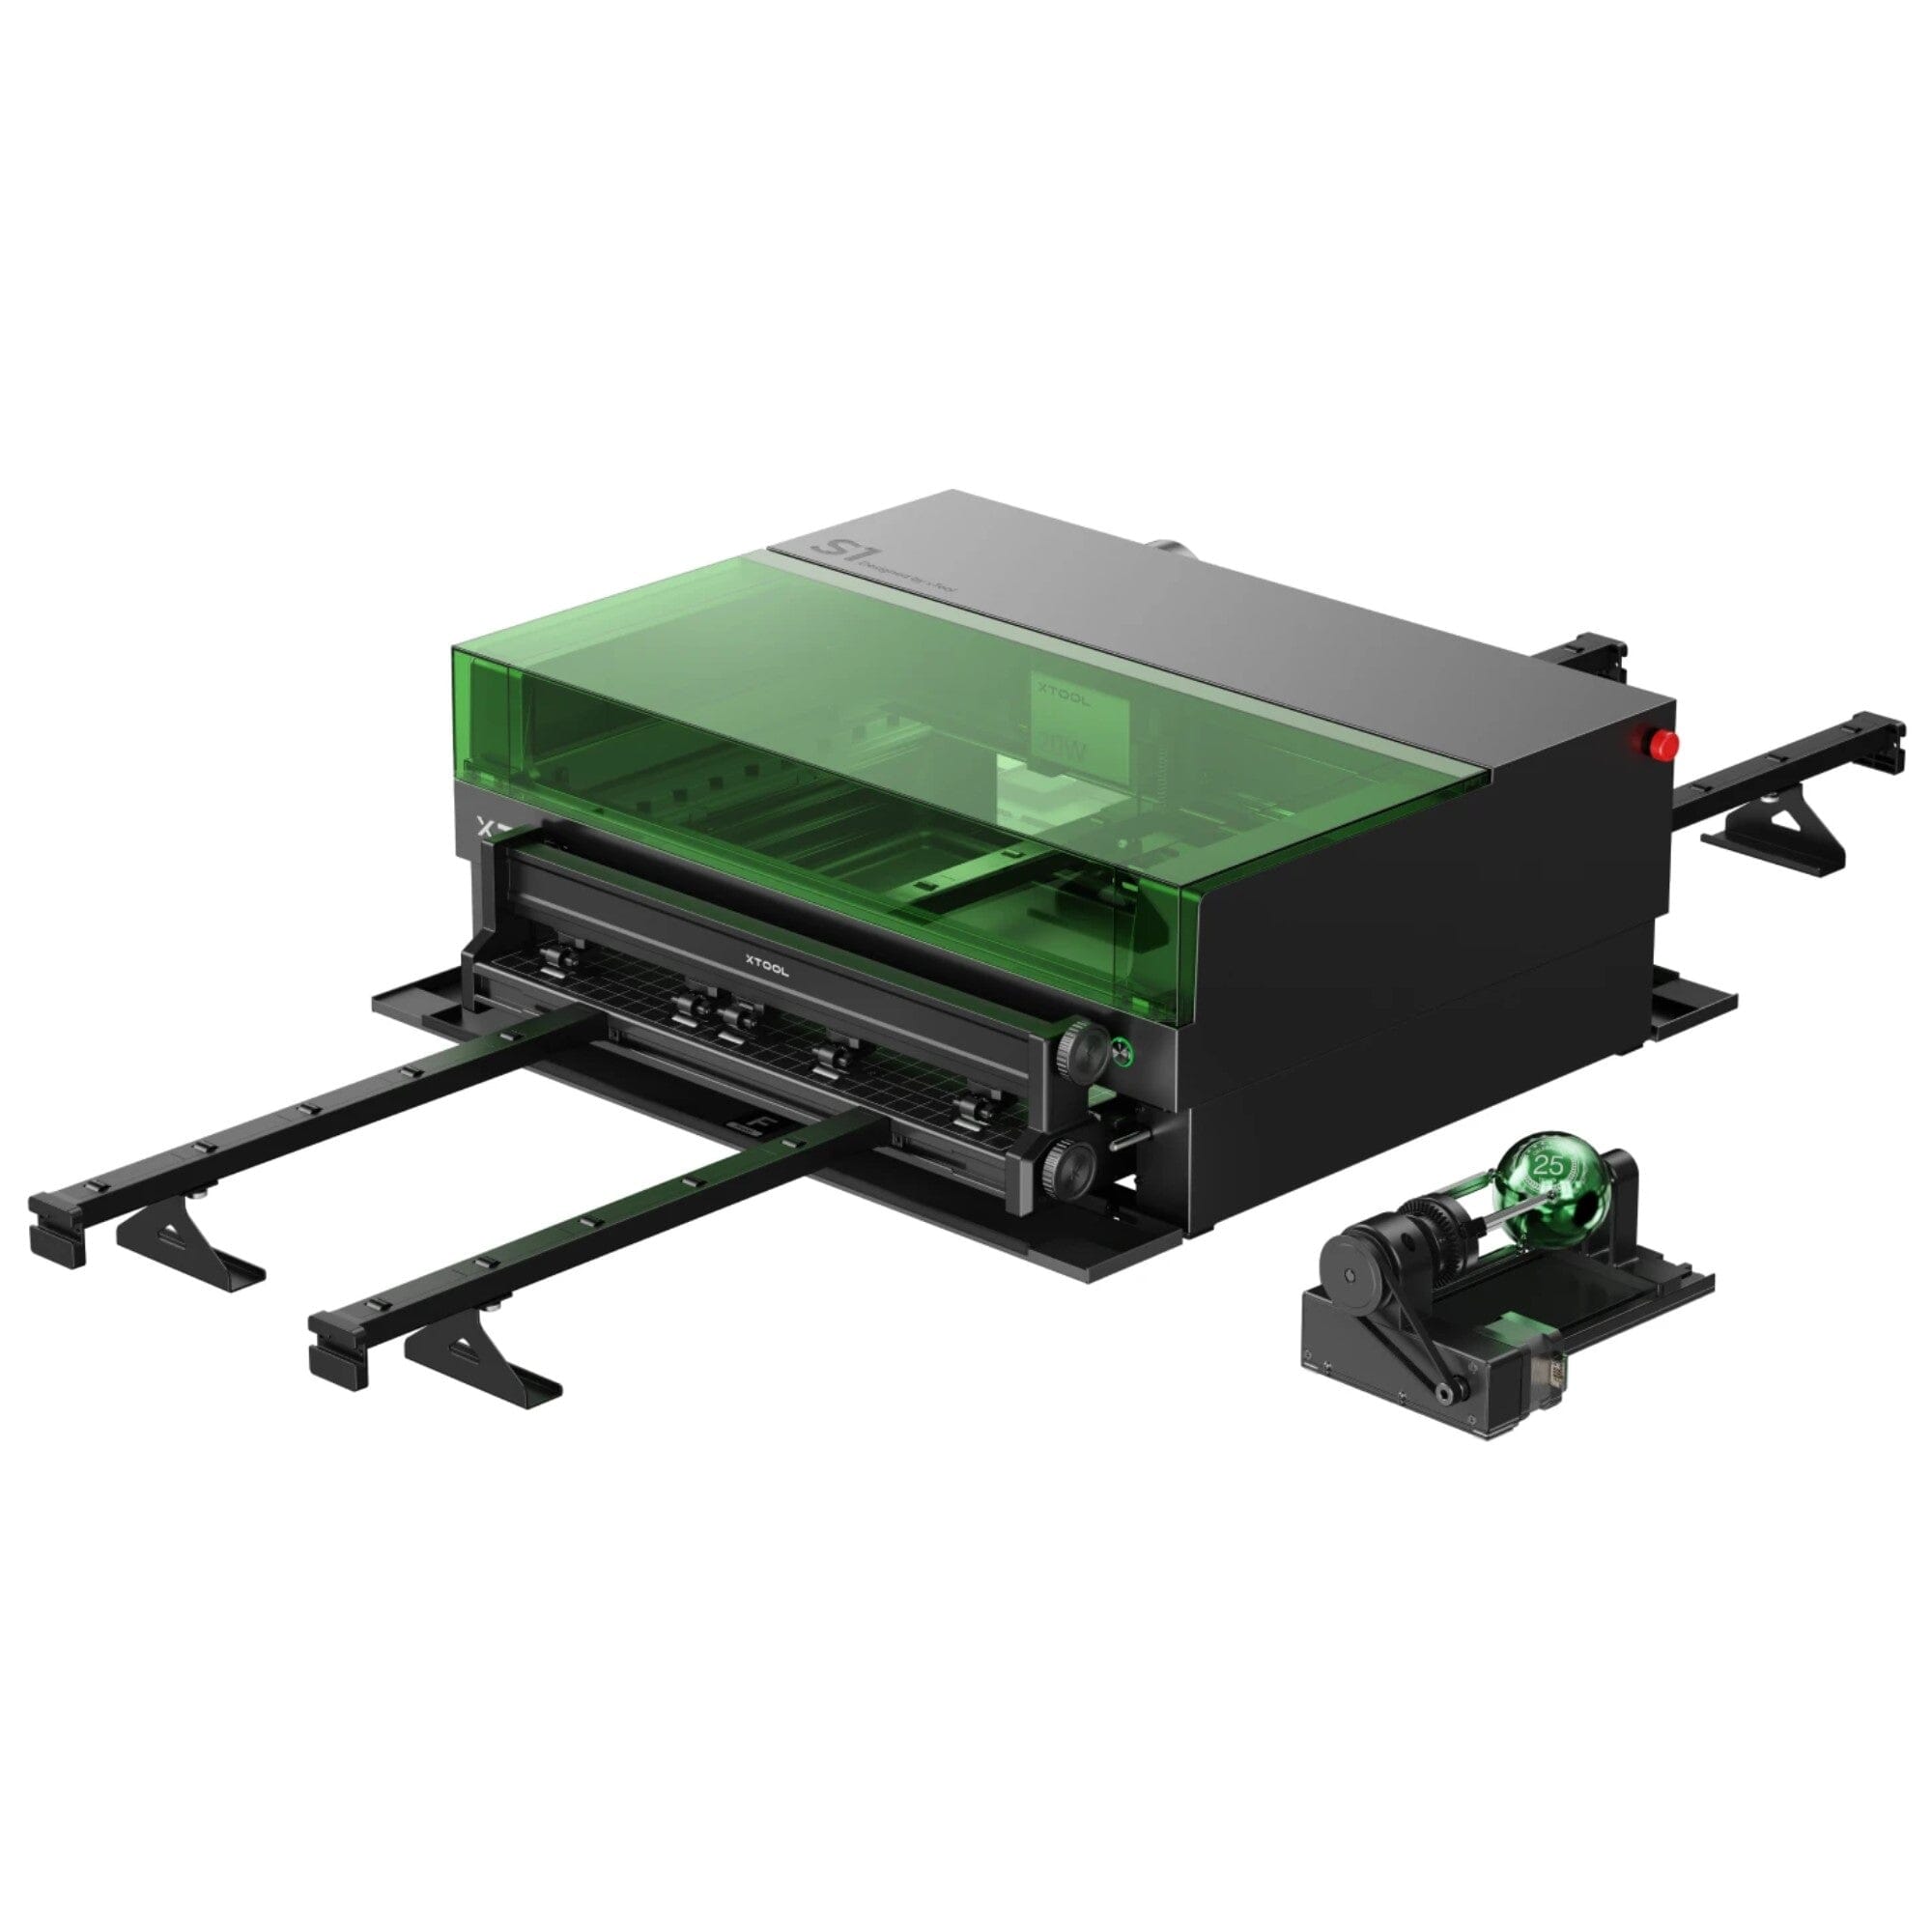 xTool S1 Laser Cutter & Engraver Machine Bundle w/ Rotary, Rail, Riser, Filter - 40W Diode Laser +